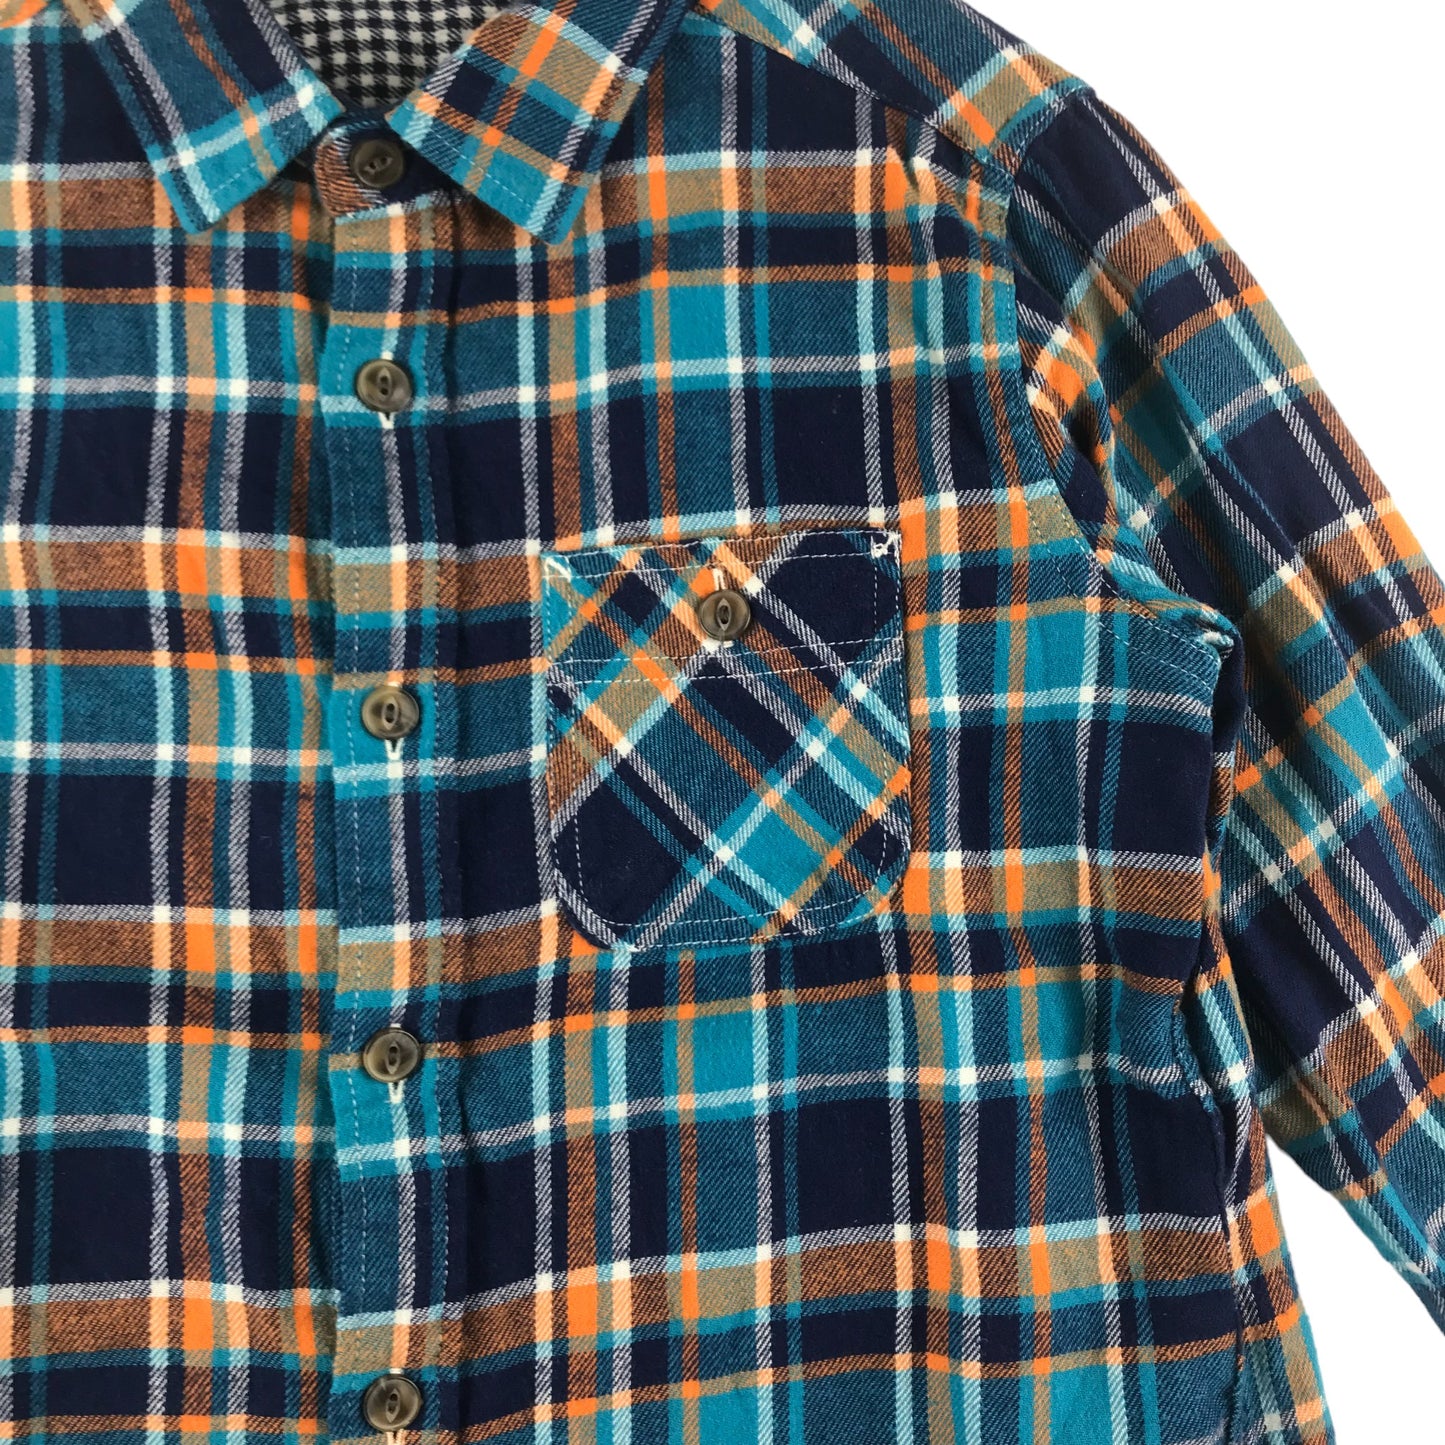 Uniqlo Shirt Age 7 Blue and Orange Checked Flannel Button Up Cotton